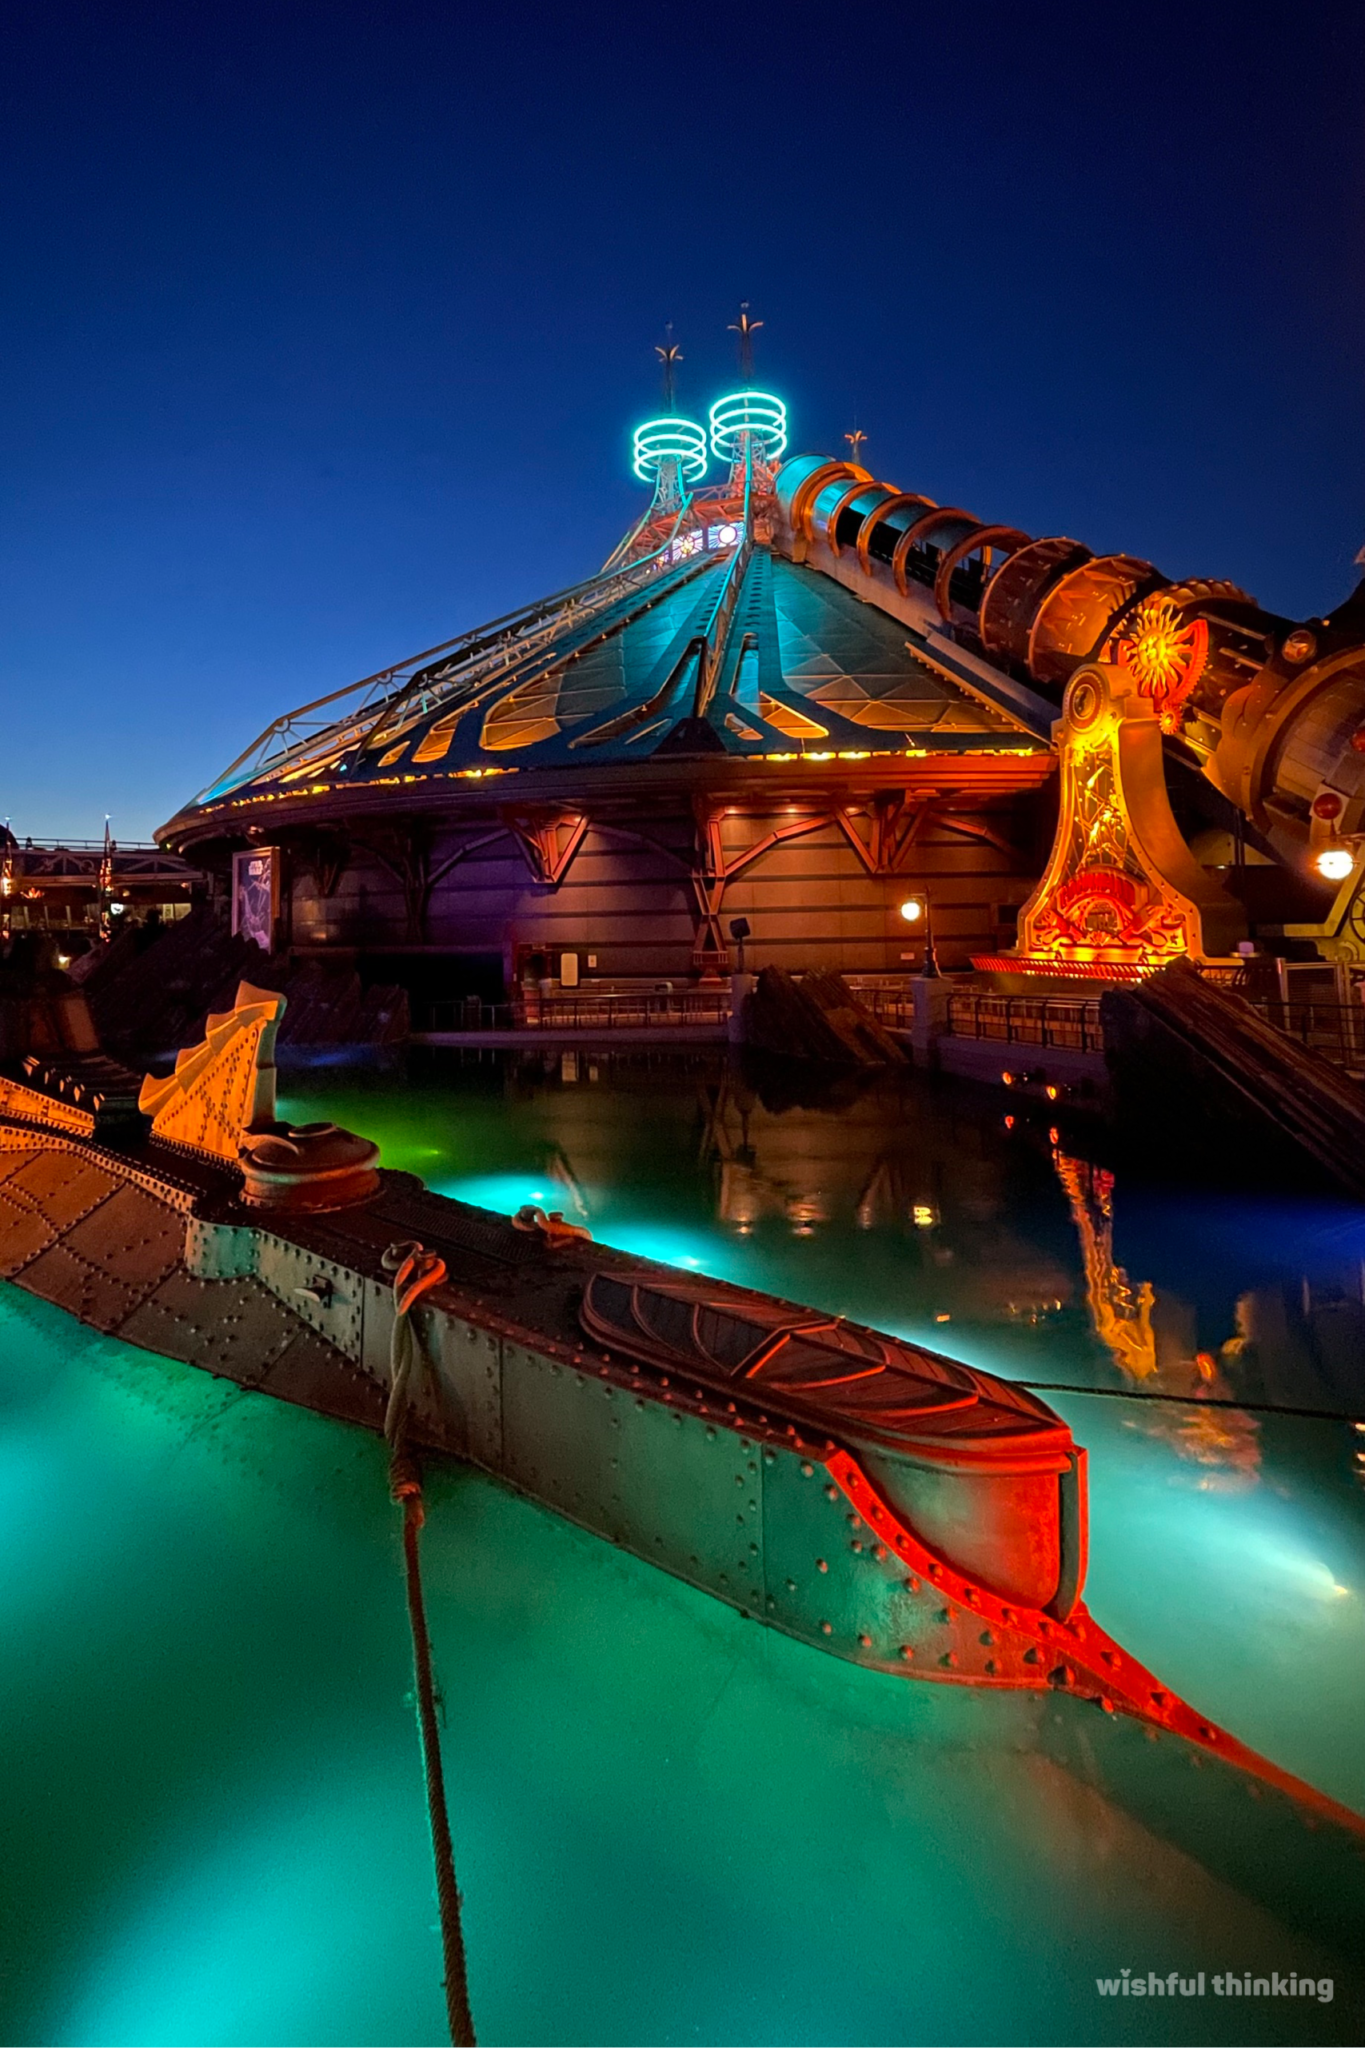 The gorgeous night of Disneyland Paris's Discoveryland illuminates the Nautilus submarine and Space Mountain